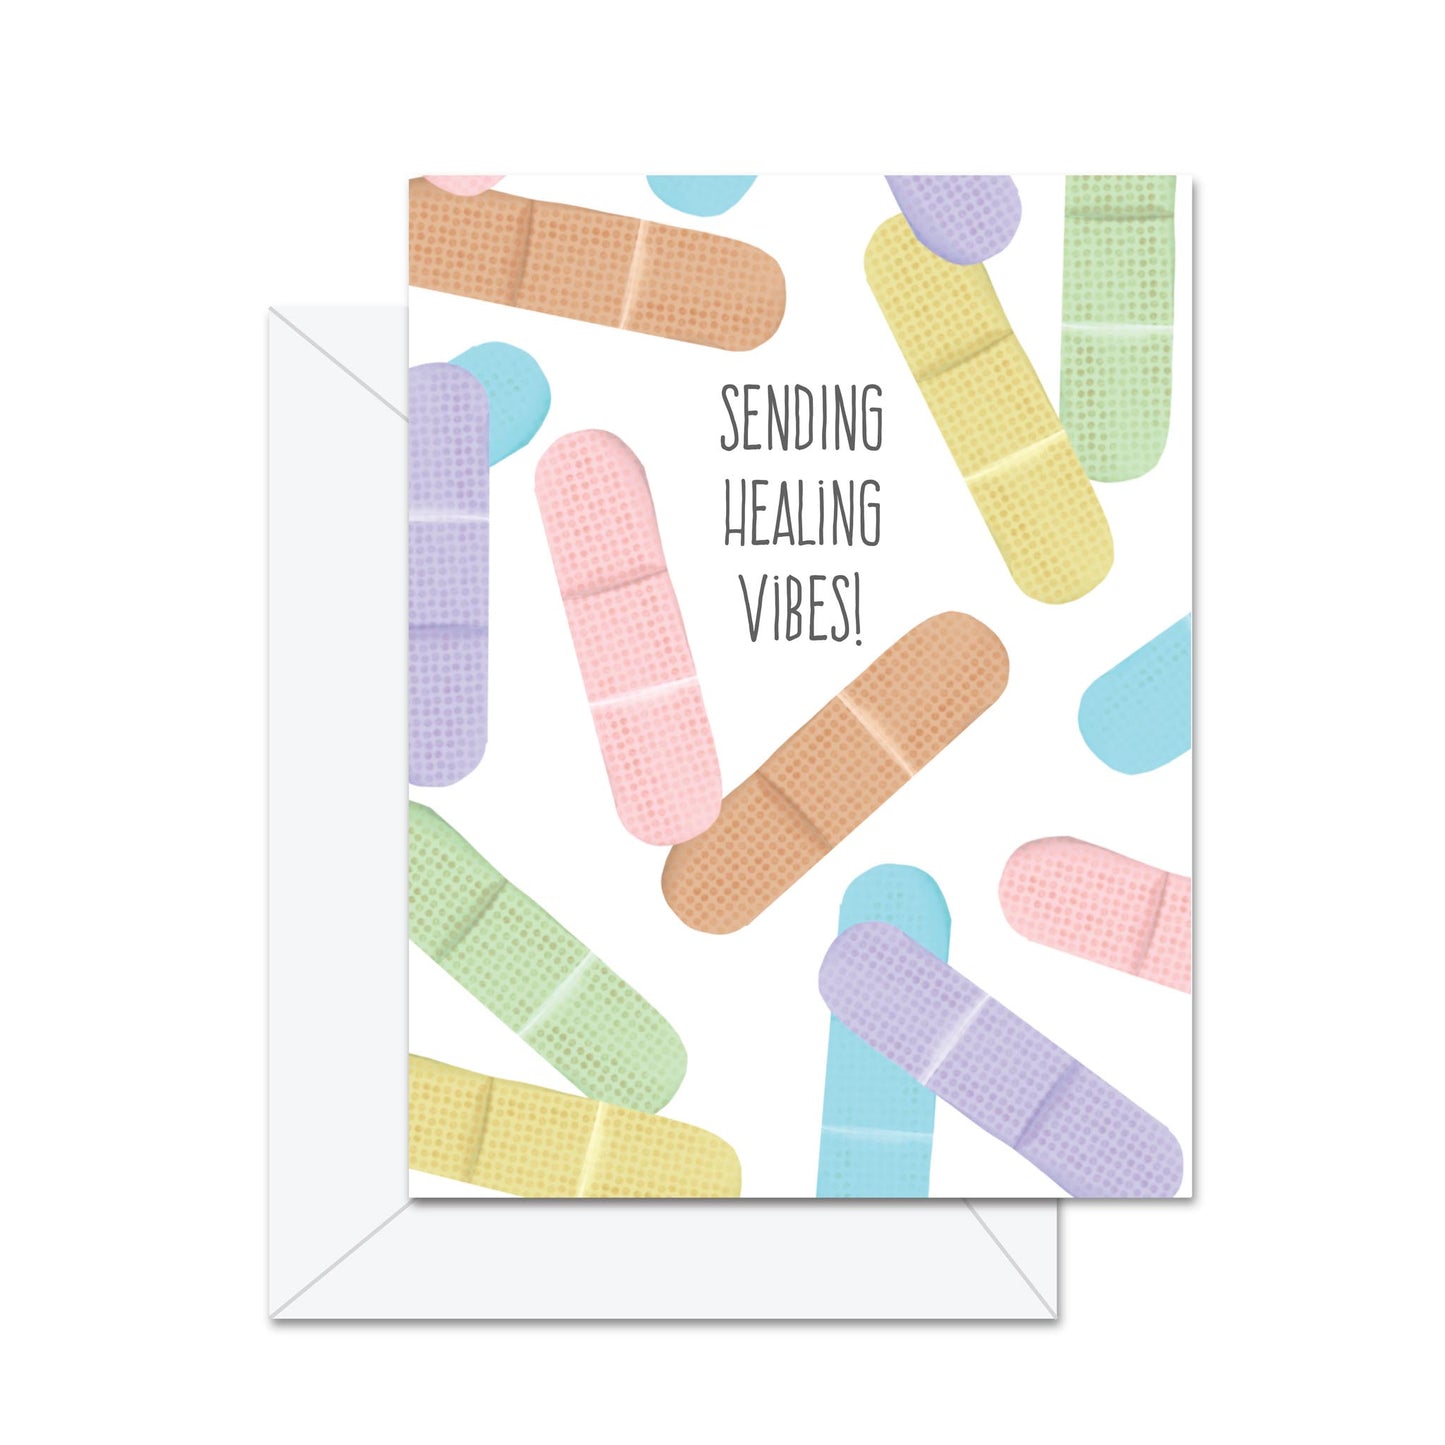 Sending Healing Vibes! - Greeting Card